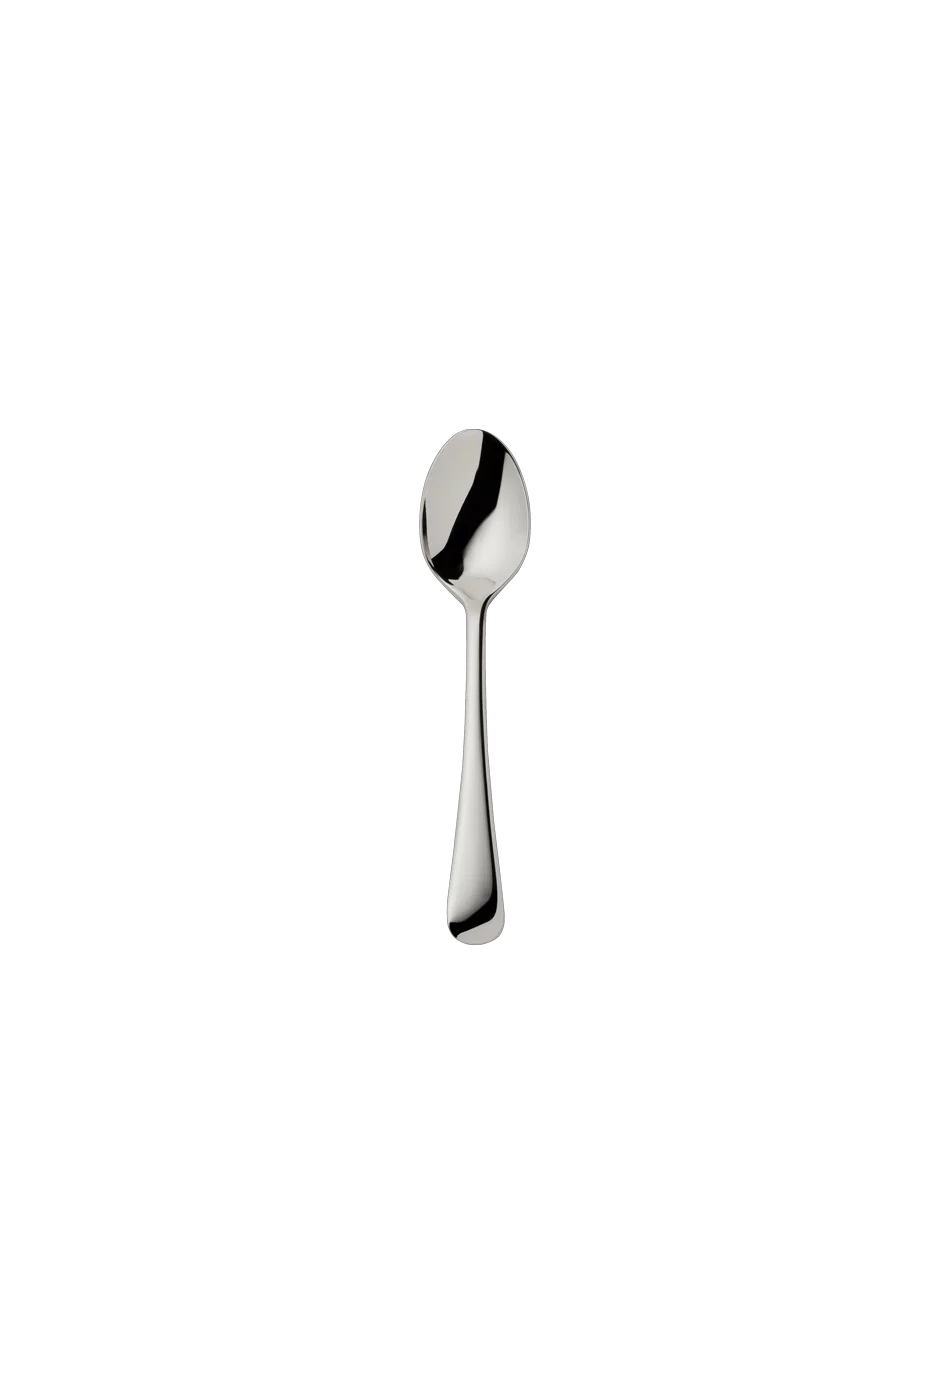 Como Mocha Spoon 10,5 Cm (18/8 stainless steel)